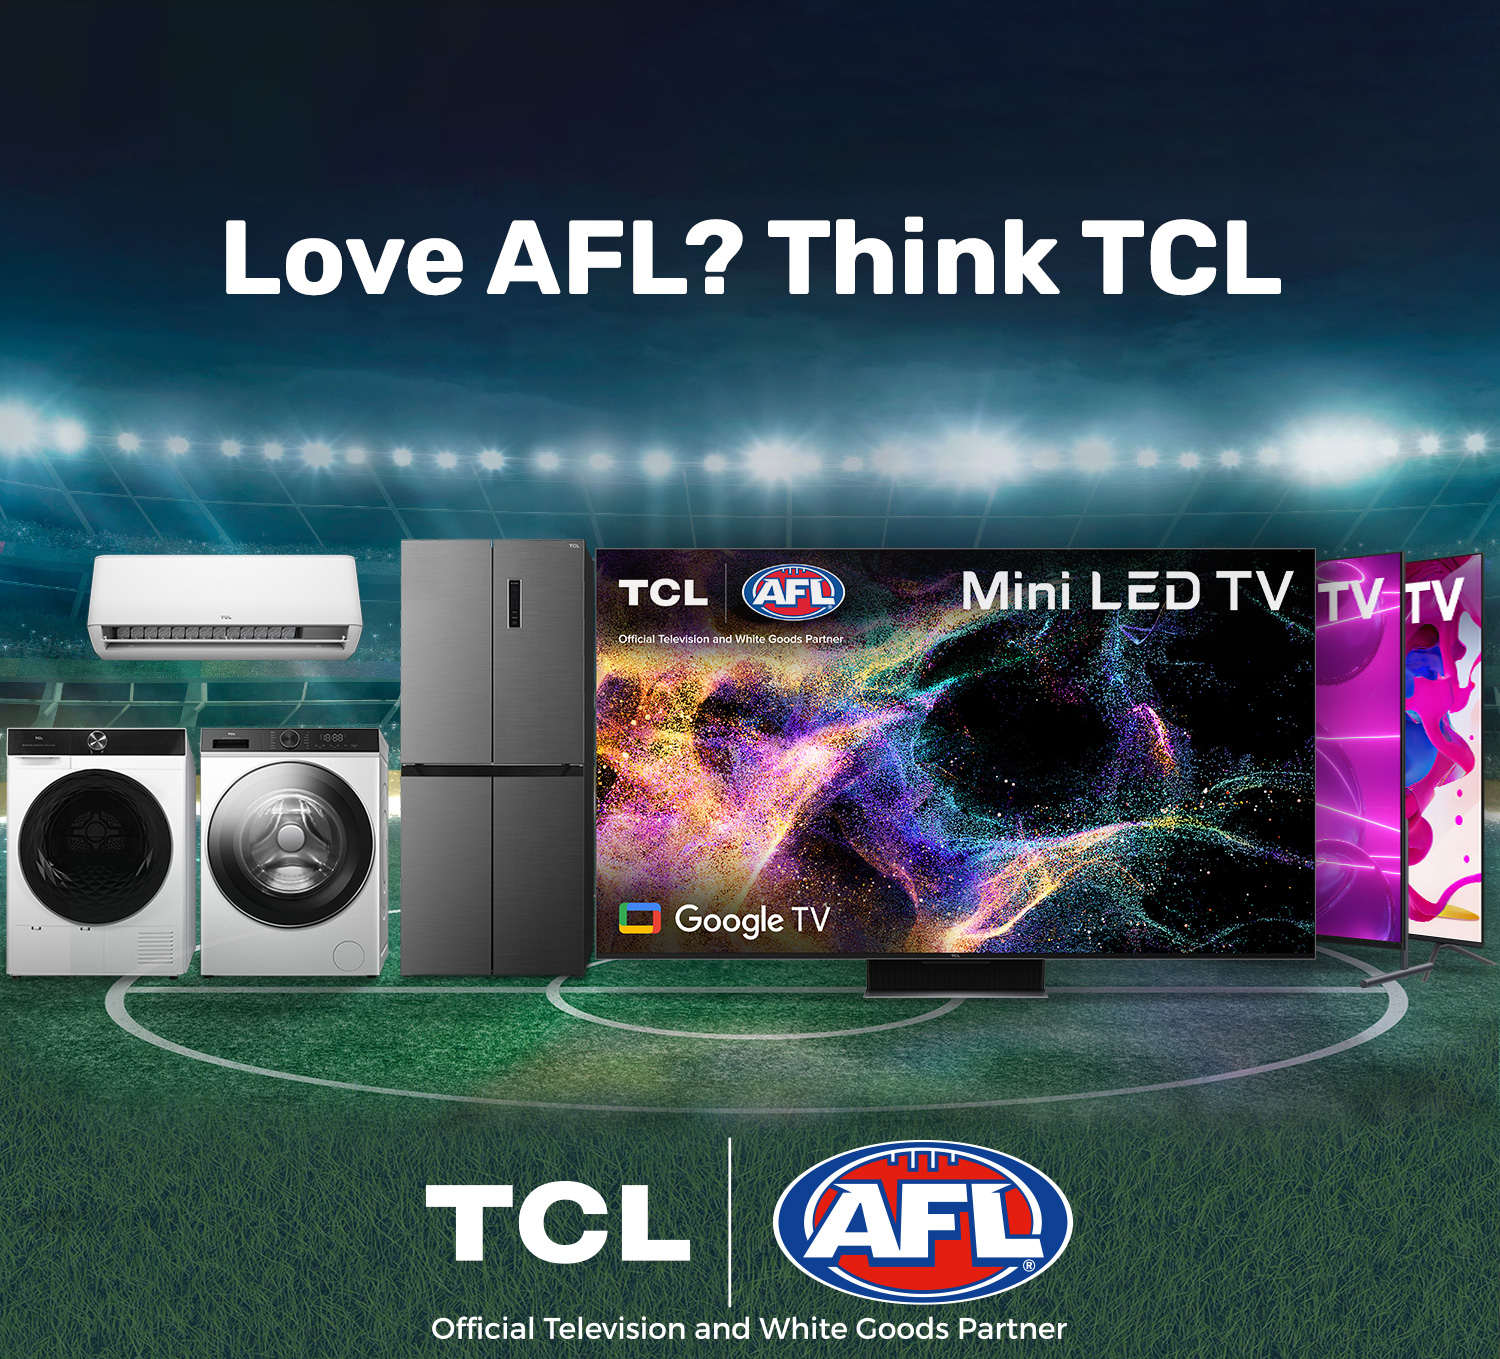 TCL-AFL-MOBILE